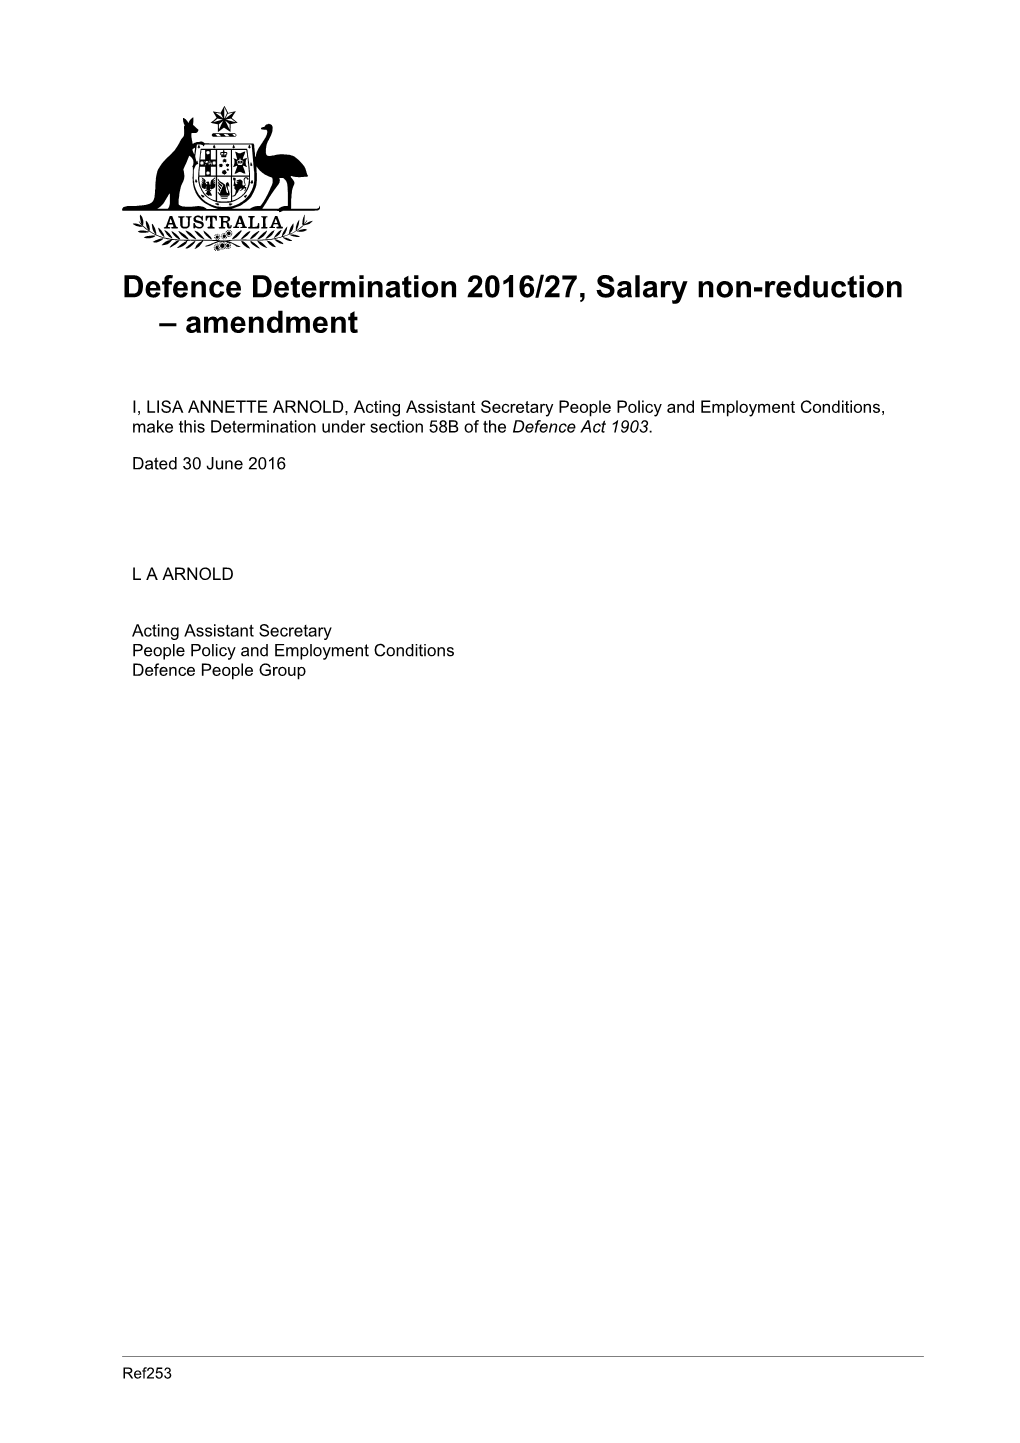 Defence Determination 2016/27, Salary Non-Reduction Amendment